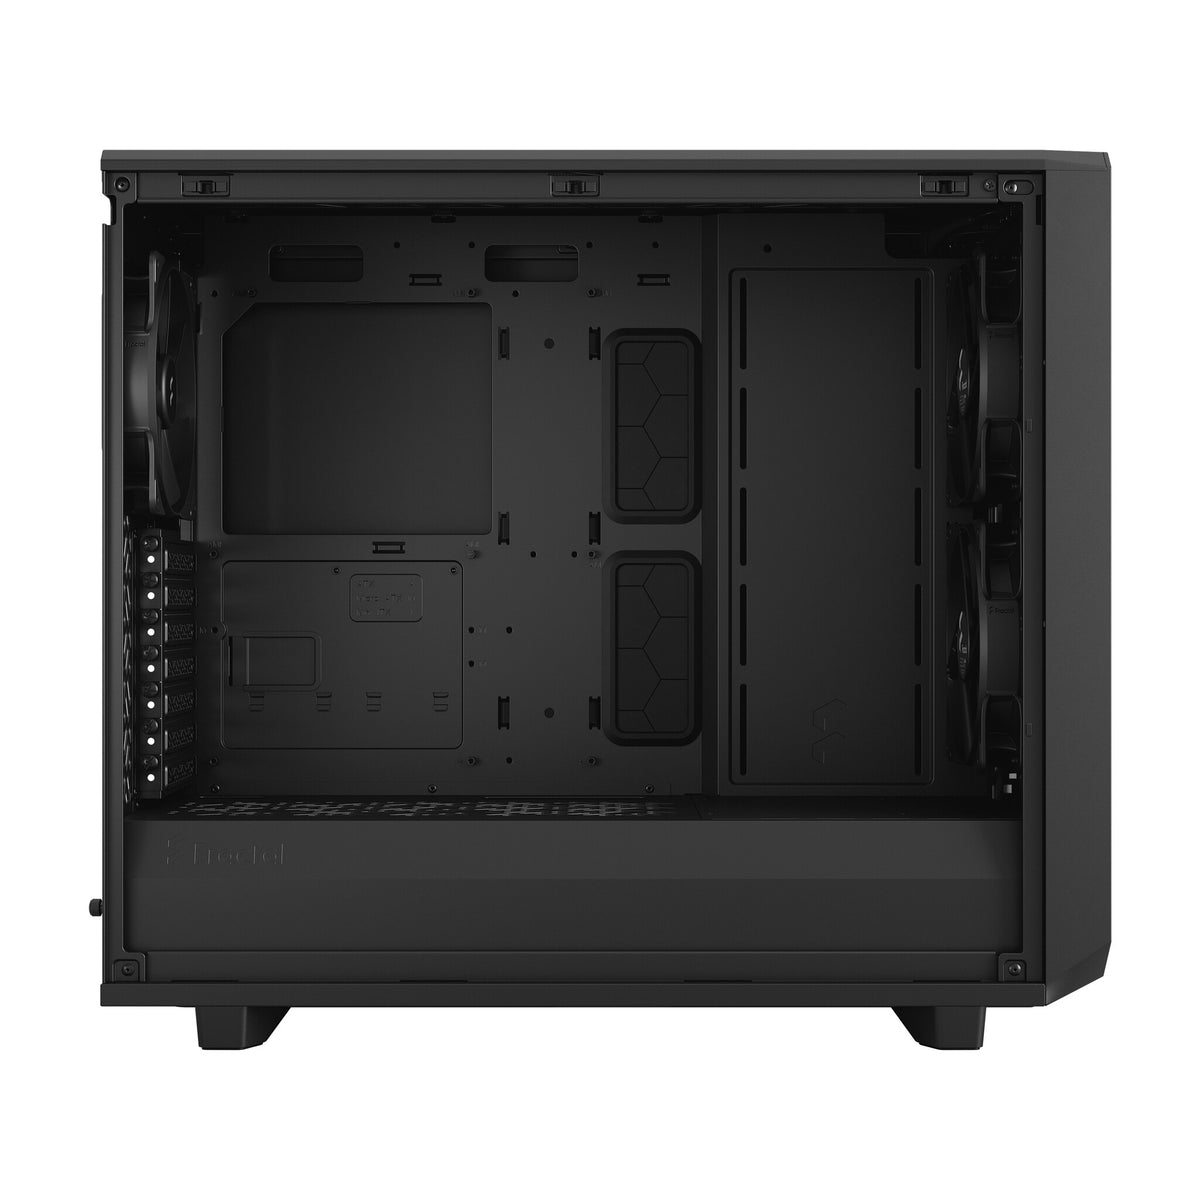 Fractal Design Meshify 2 Lite - ATX Mid Tower Case in Black